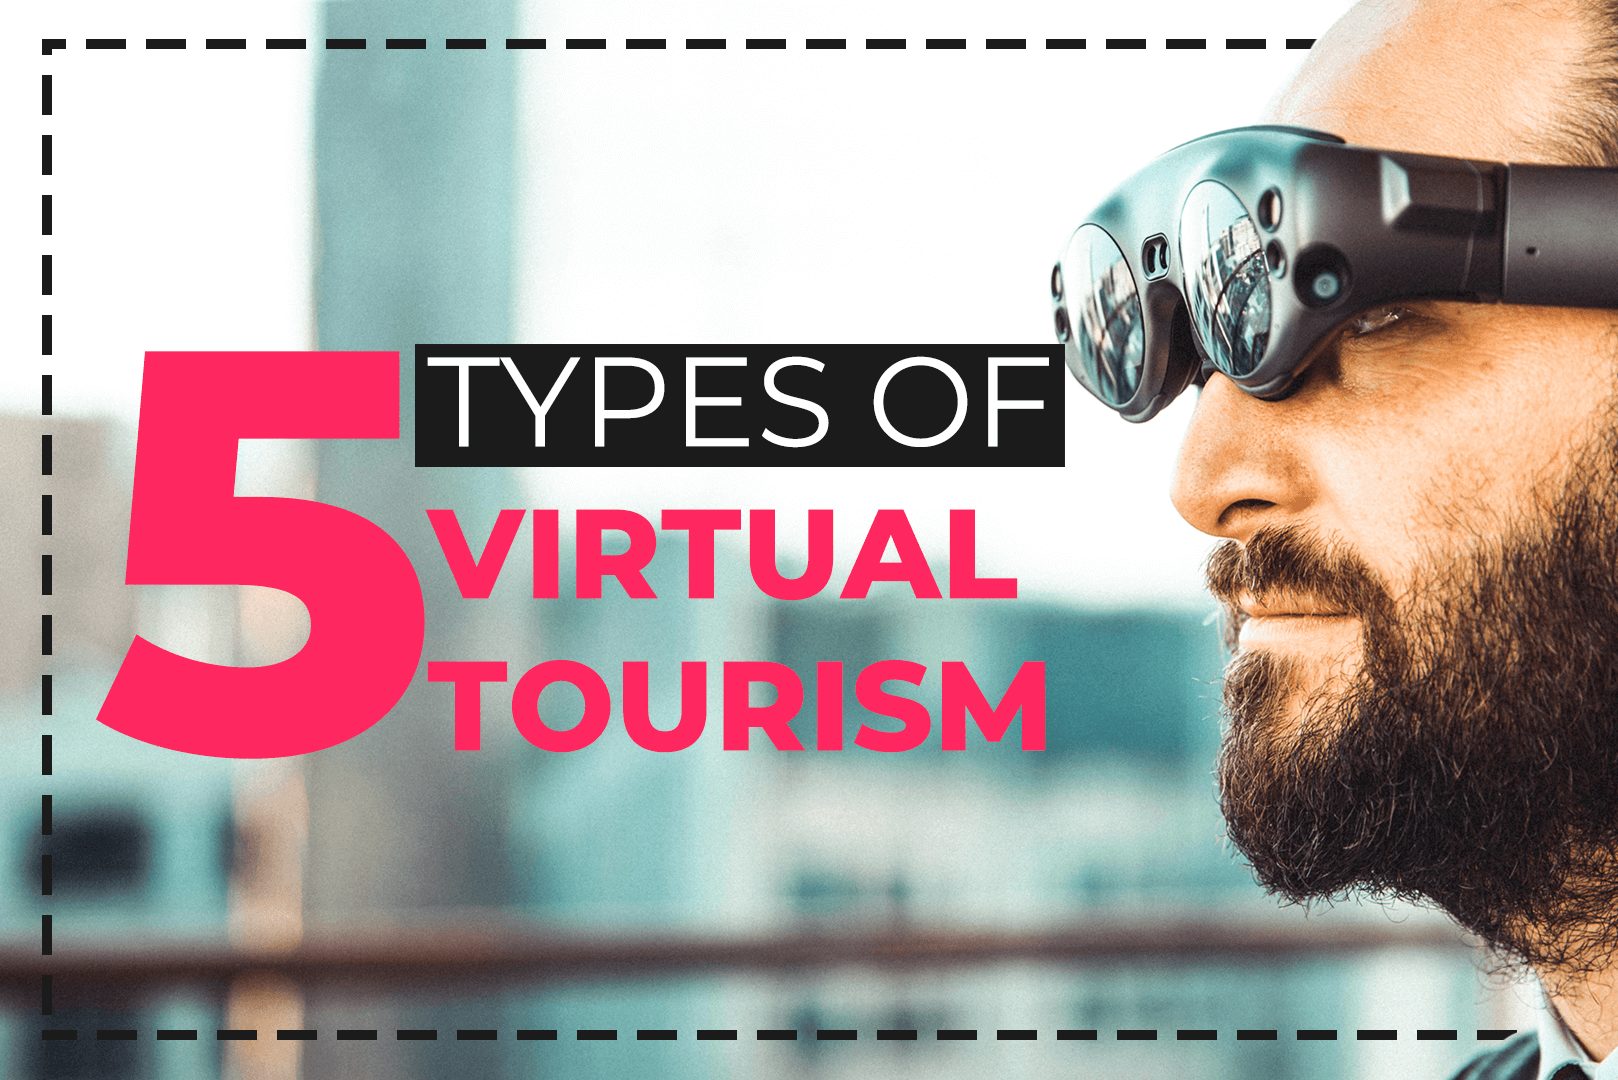 virtual tourism article